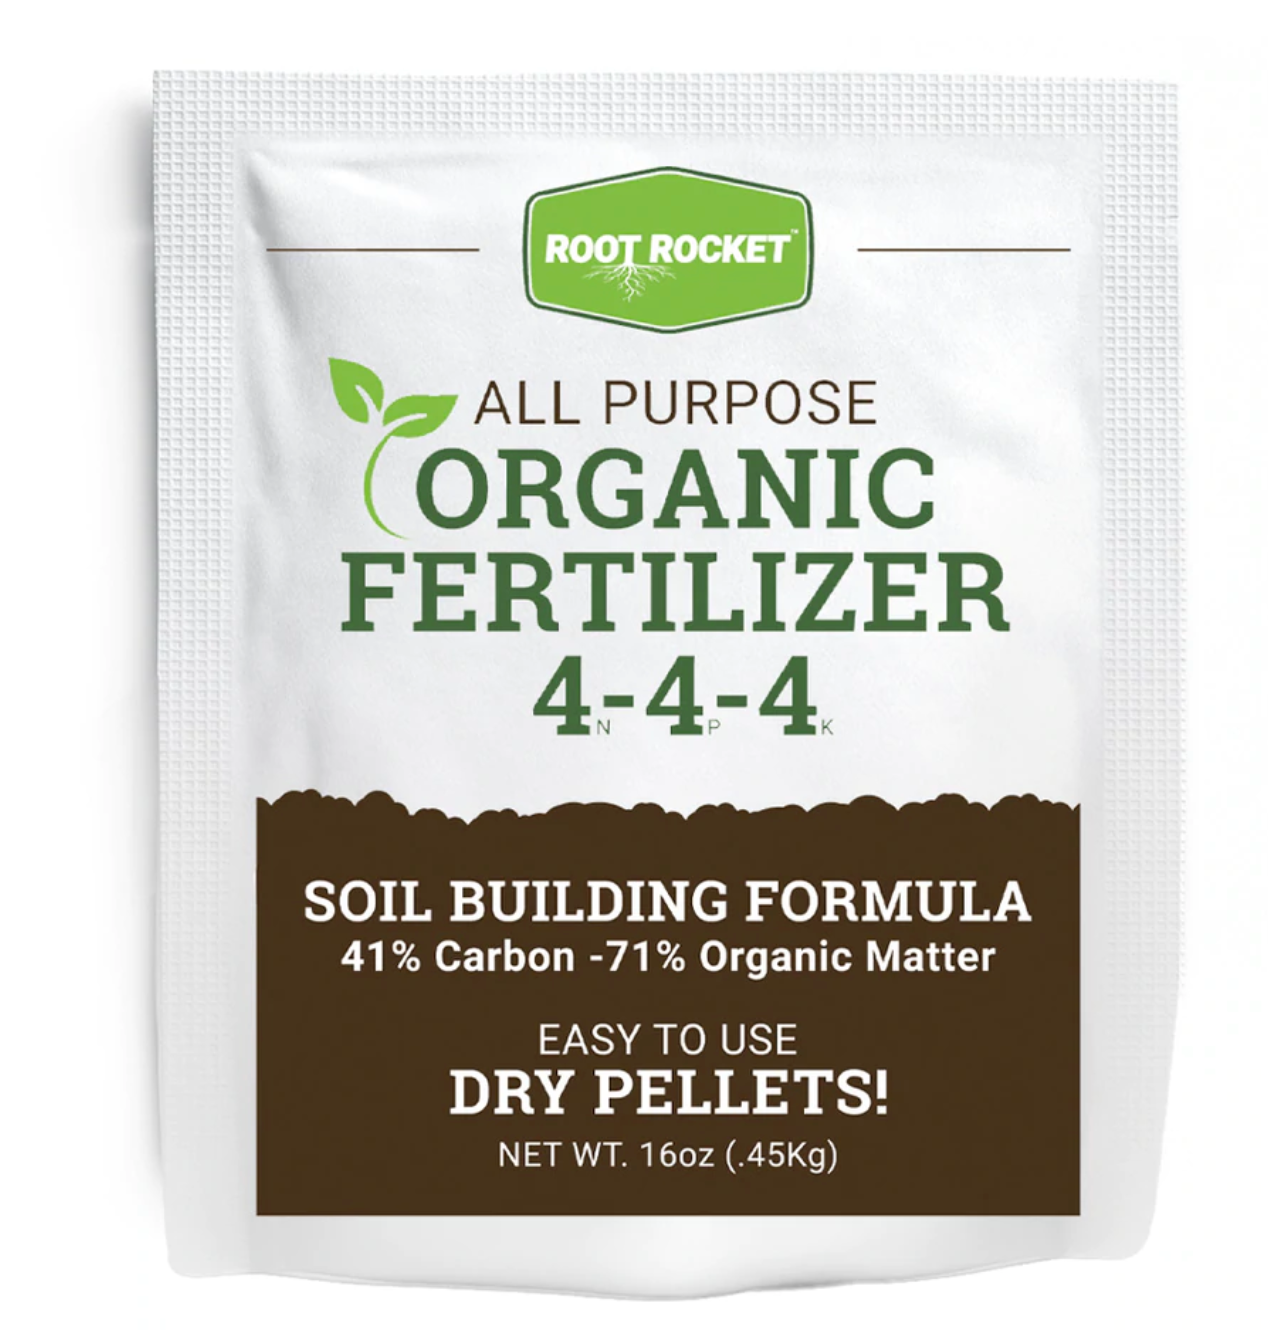 organic fertilizer